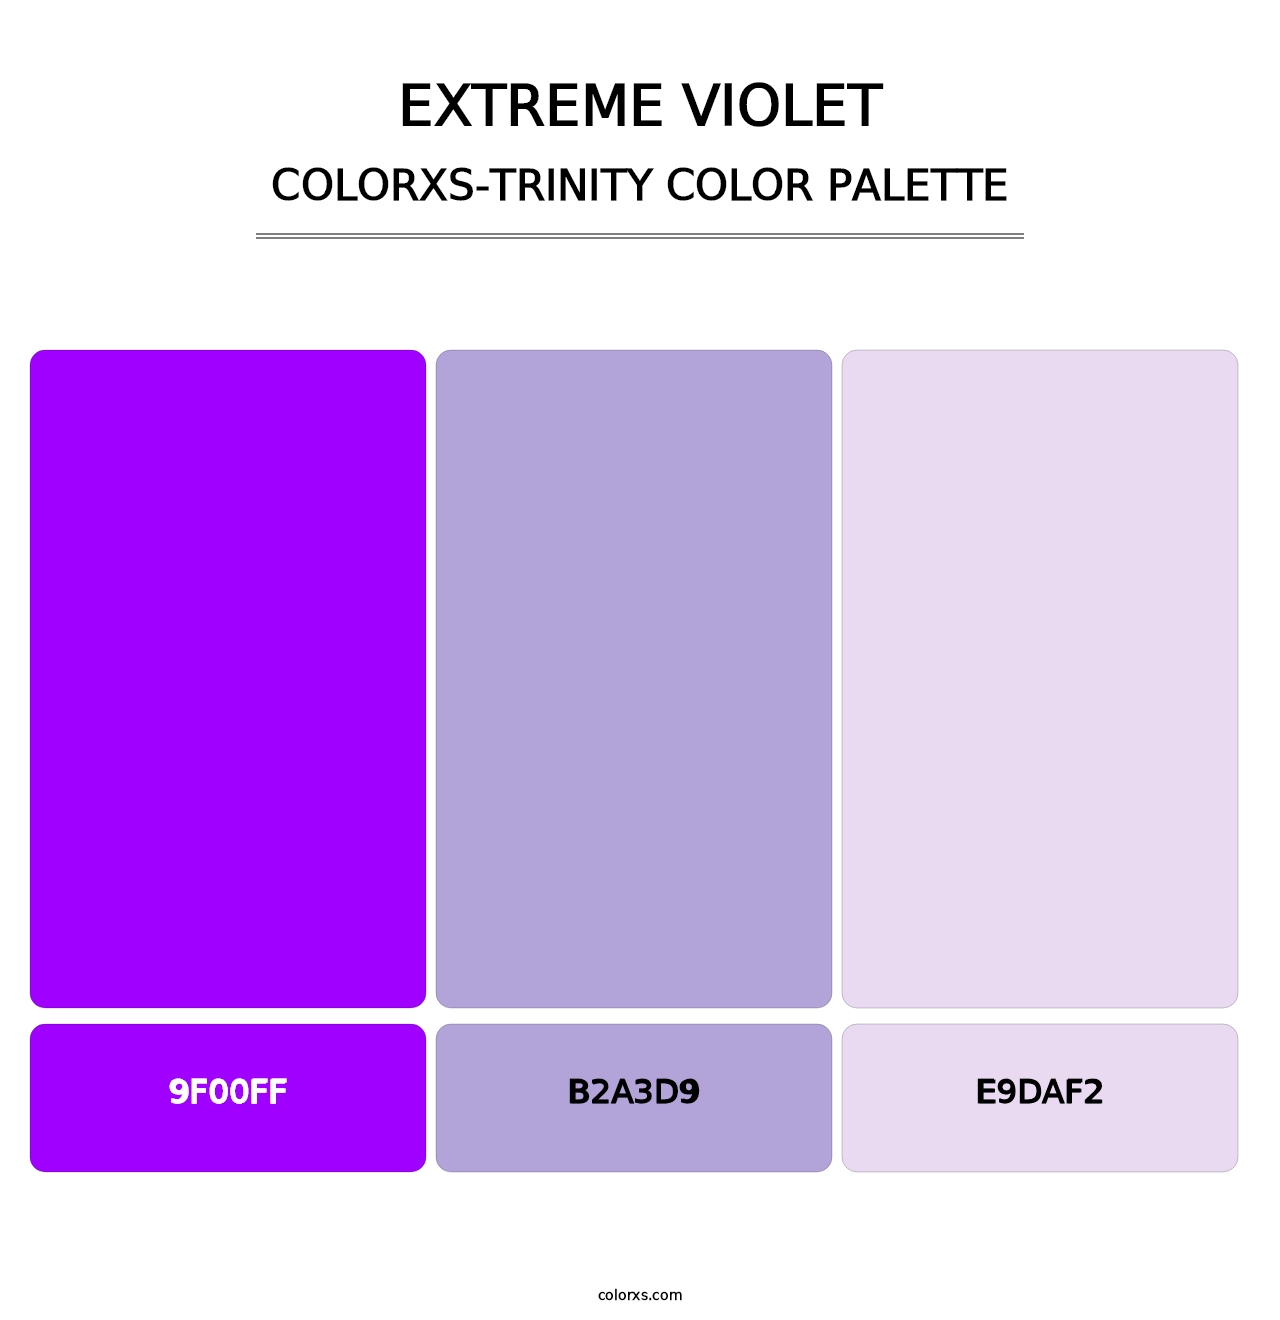 Extreme Violet - Colorxs Trinity Palette